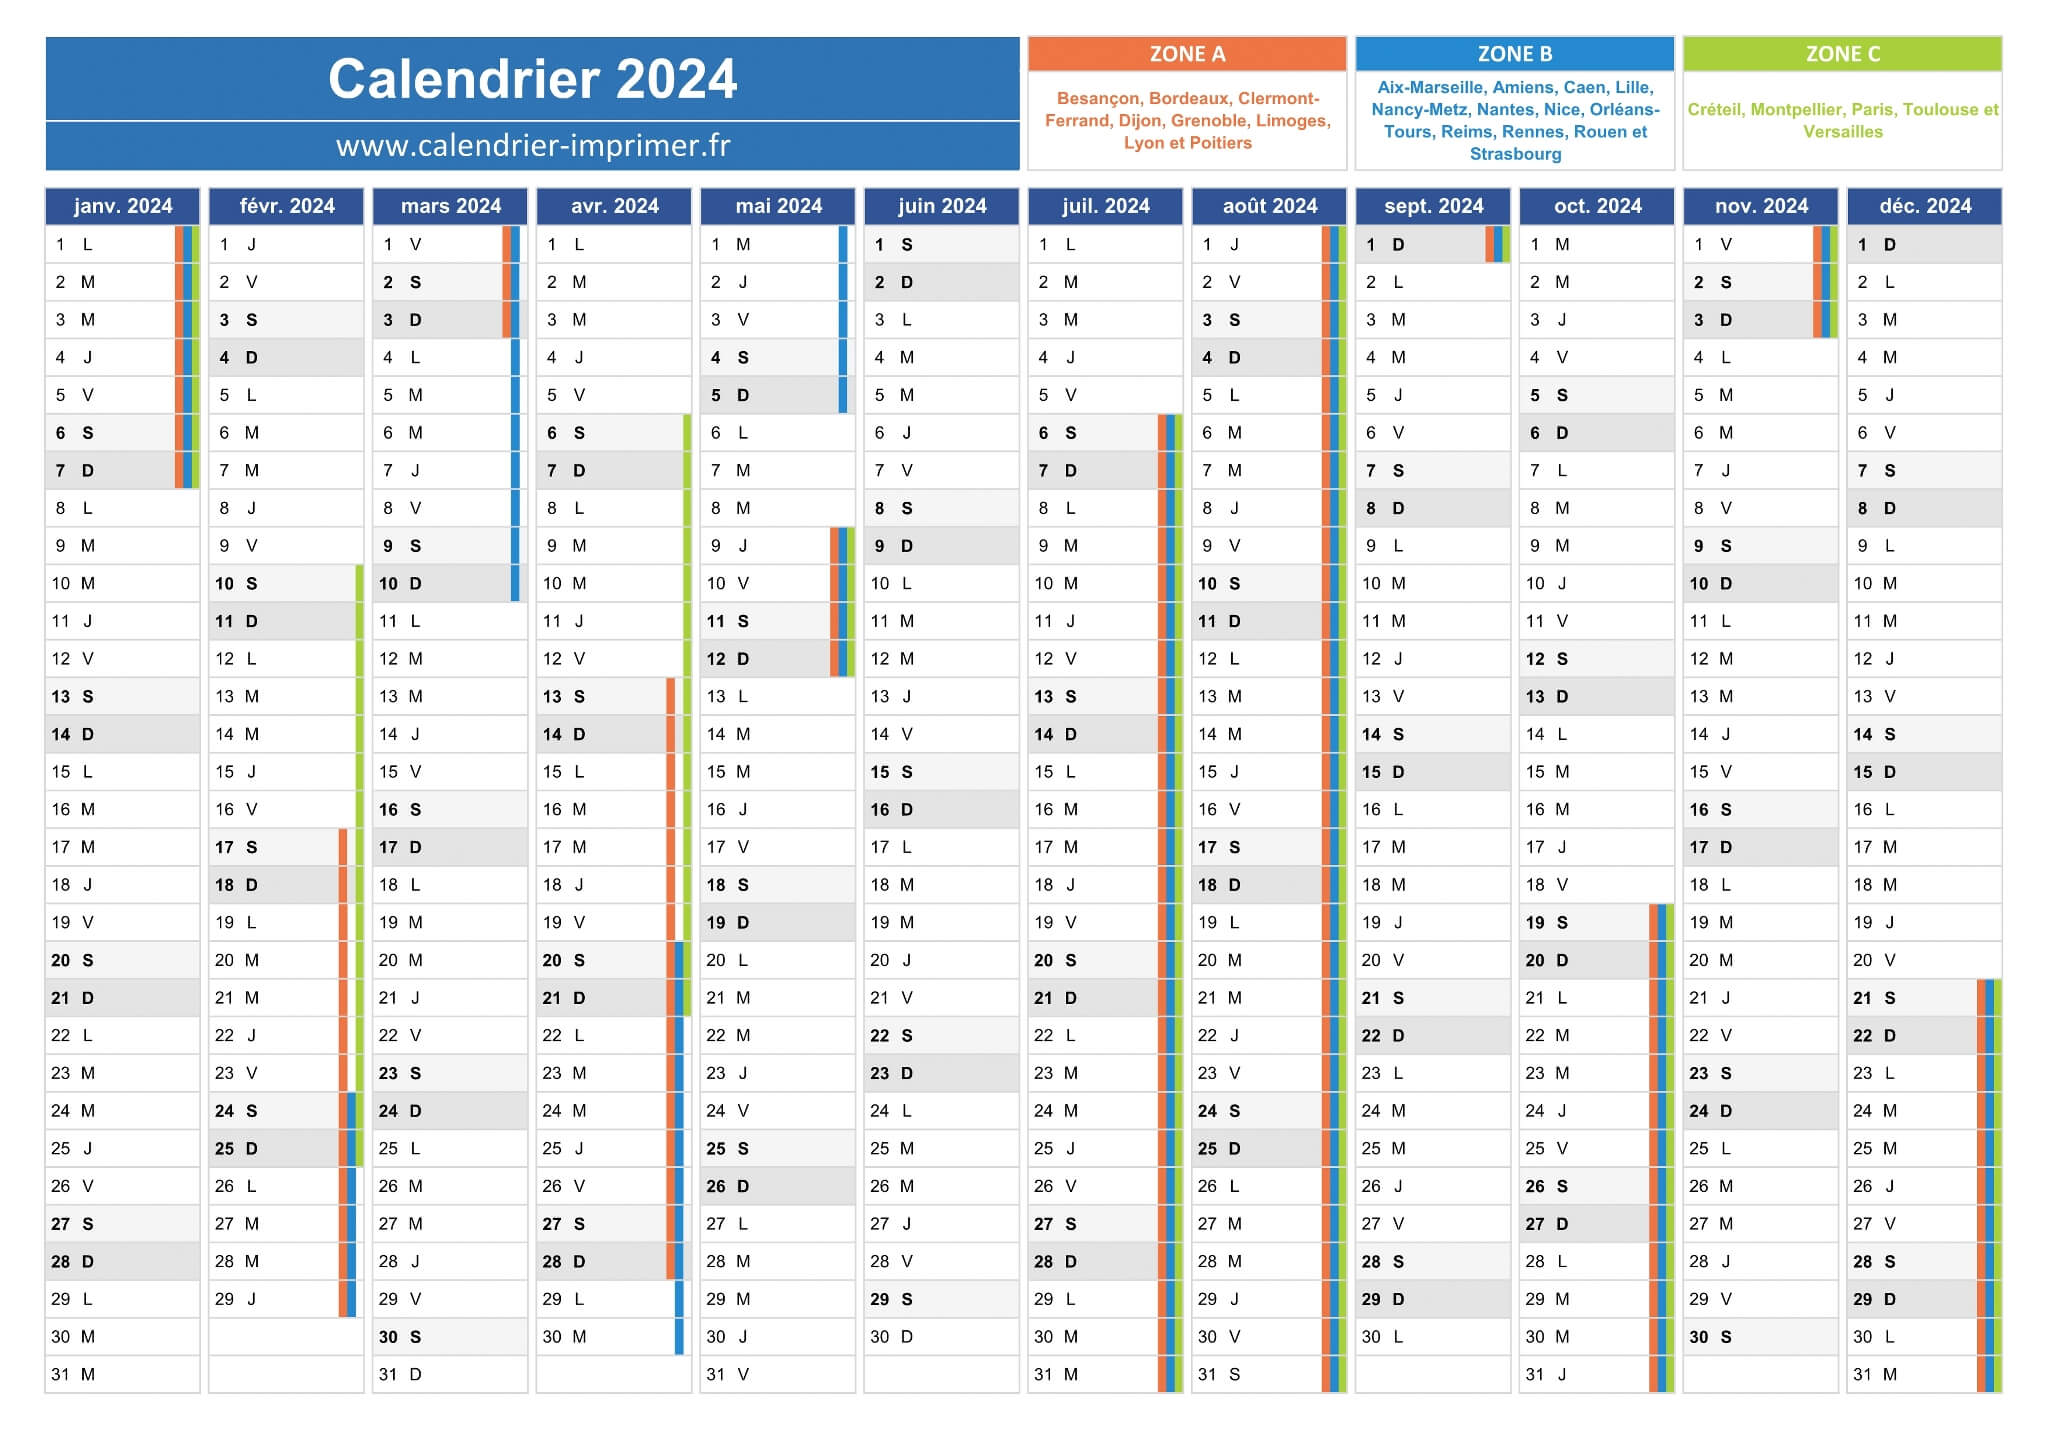 Calendrier du 1er semestre 2024 à imprimer